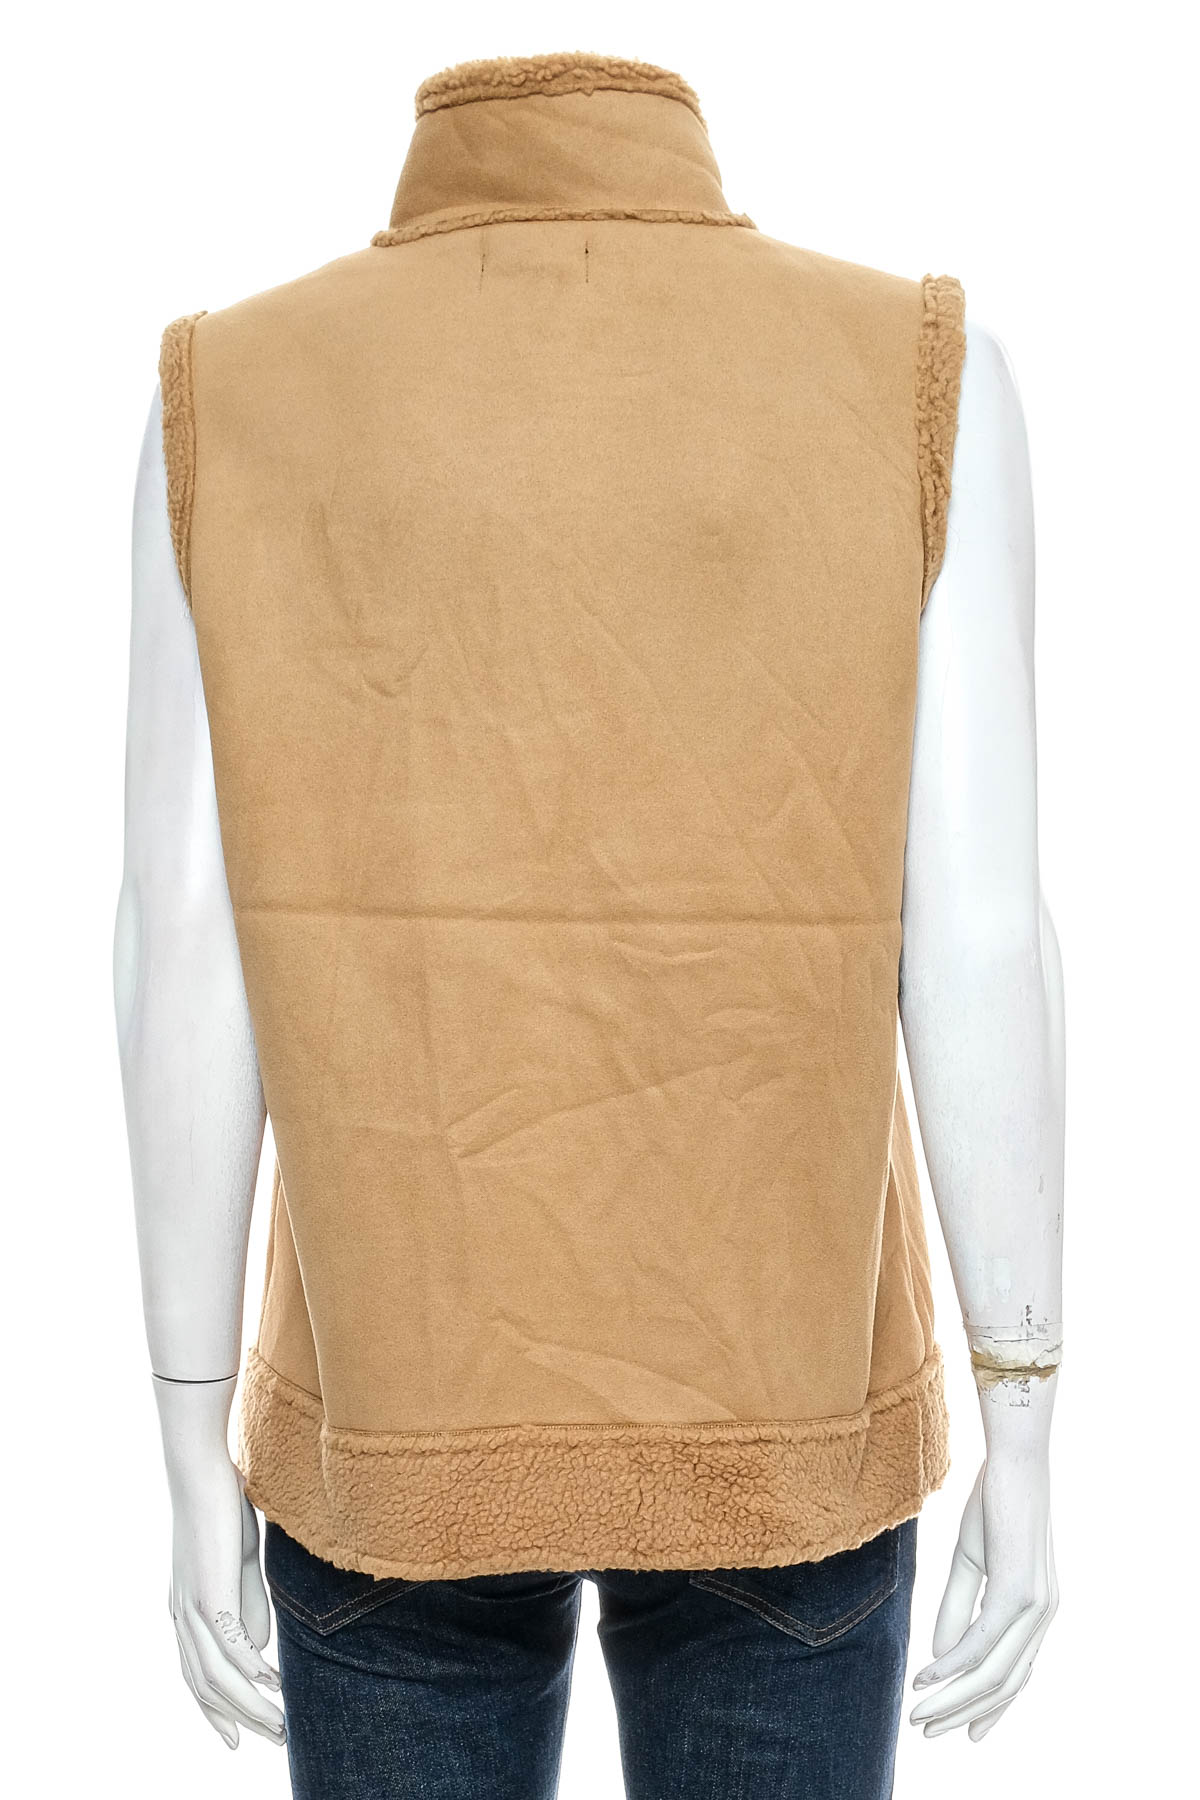 Women's vest - B.C. Clothing - 1